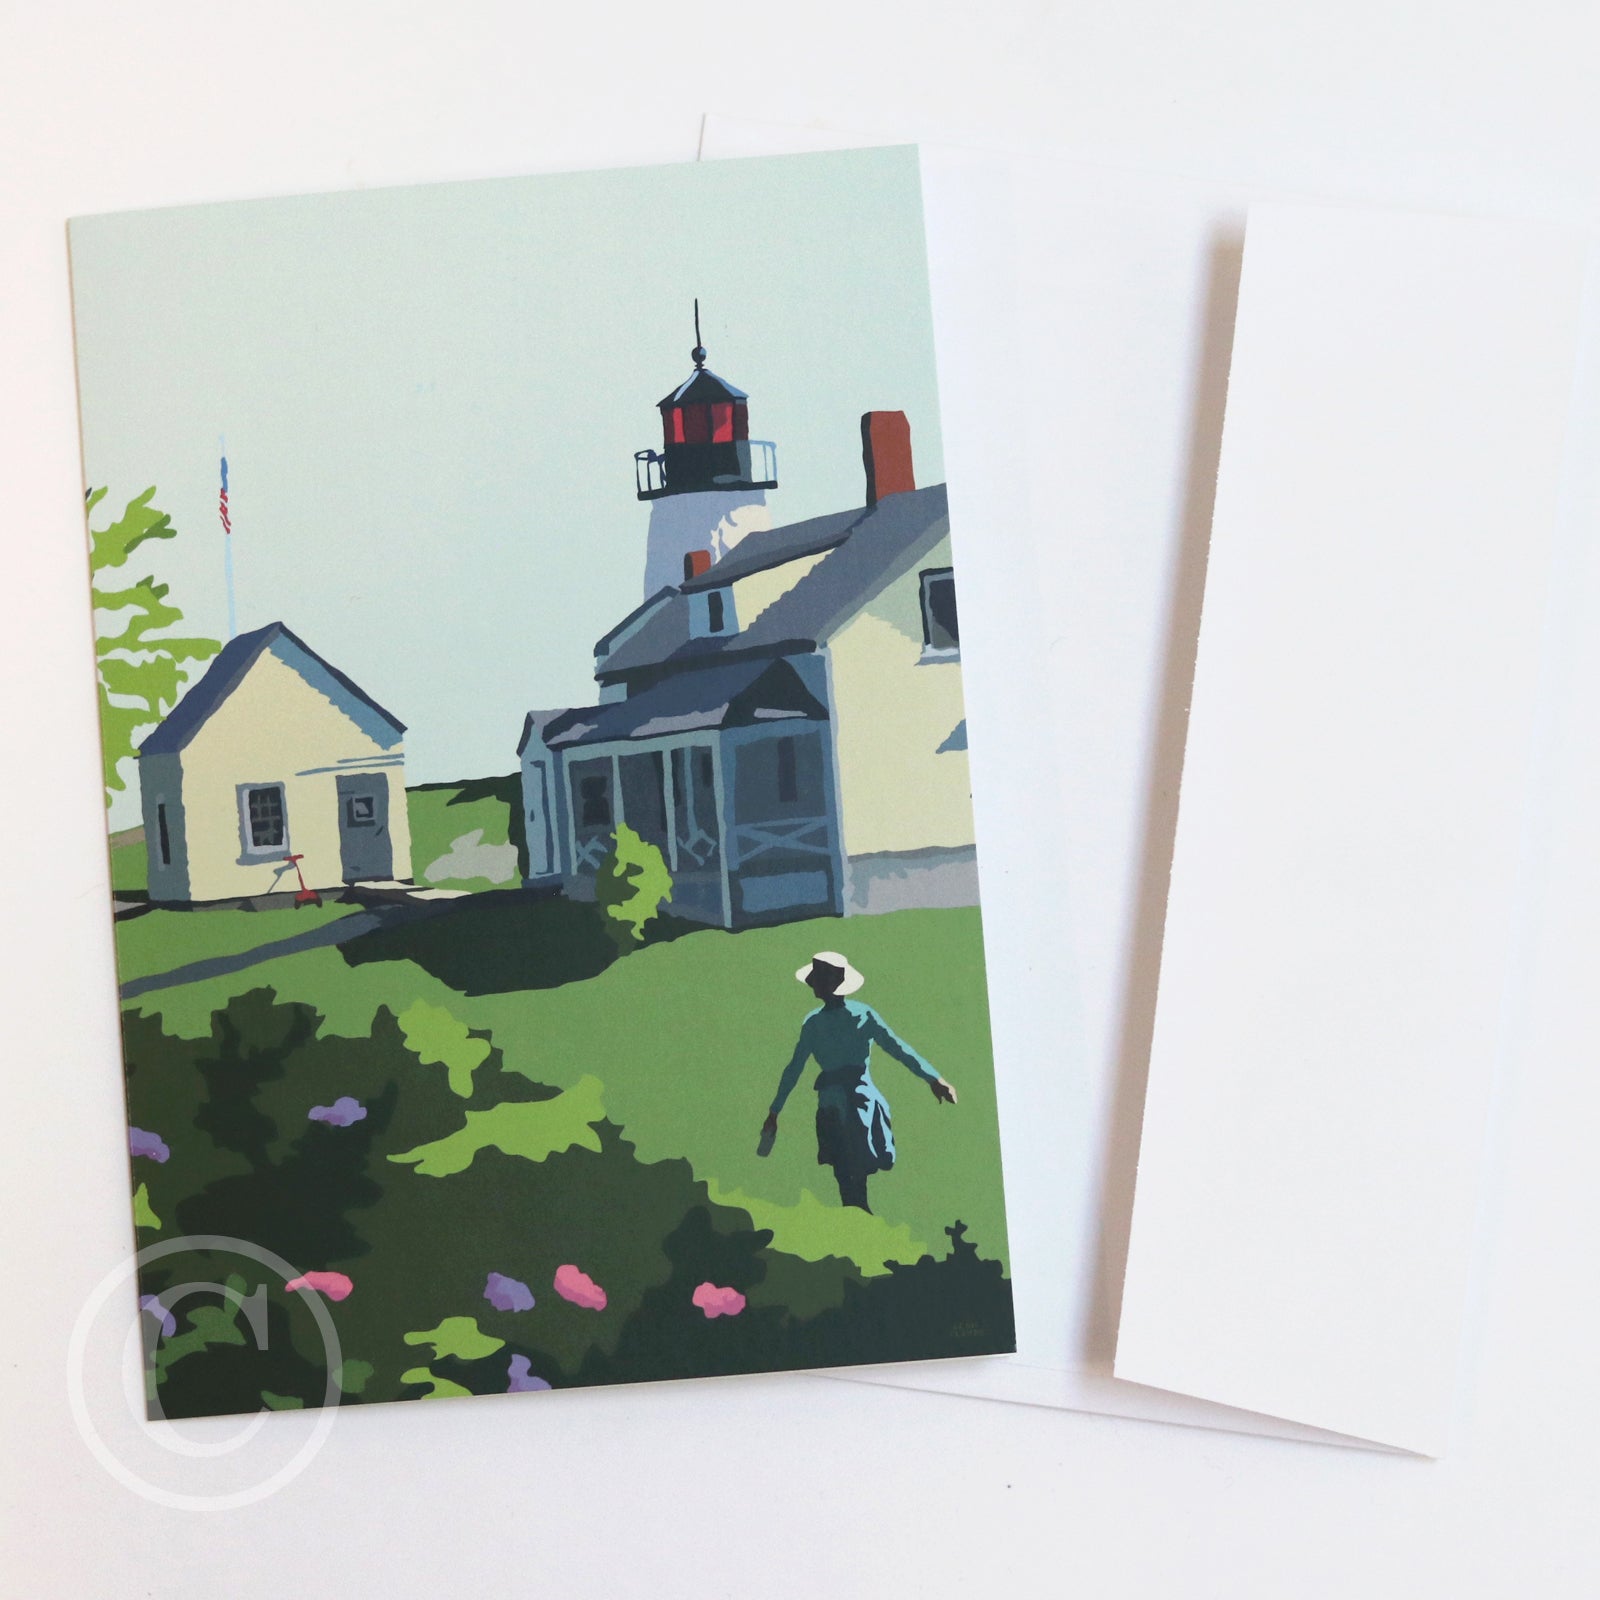 A Summer's Day on Burnt Island Light 5" x 7" Notecard - Maine